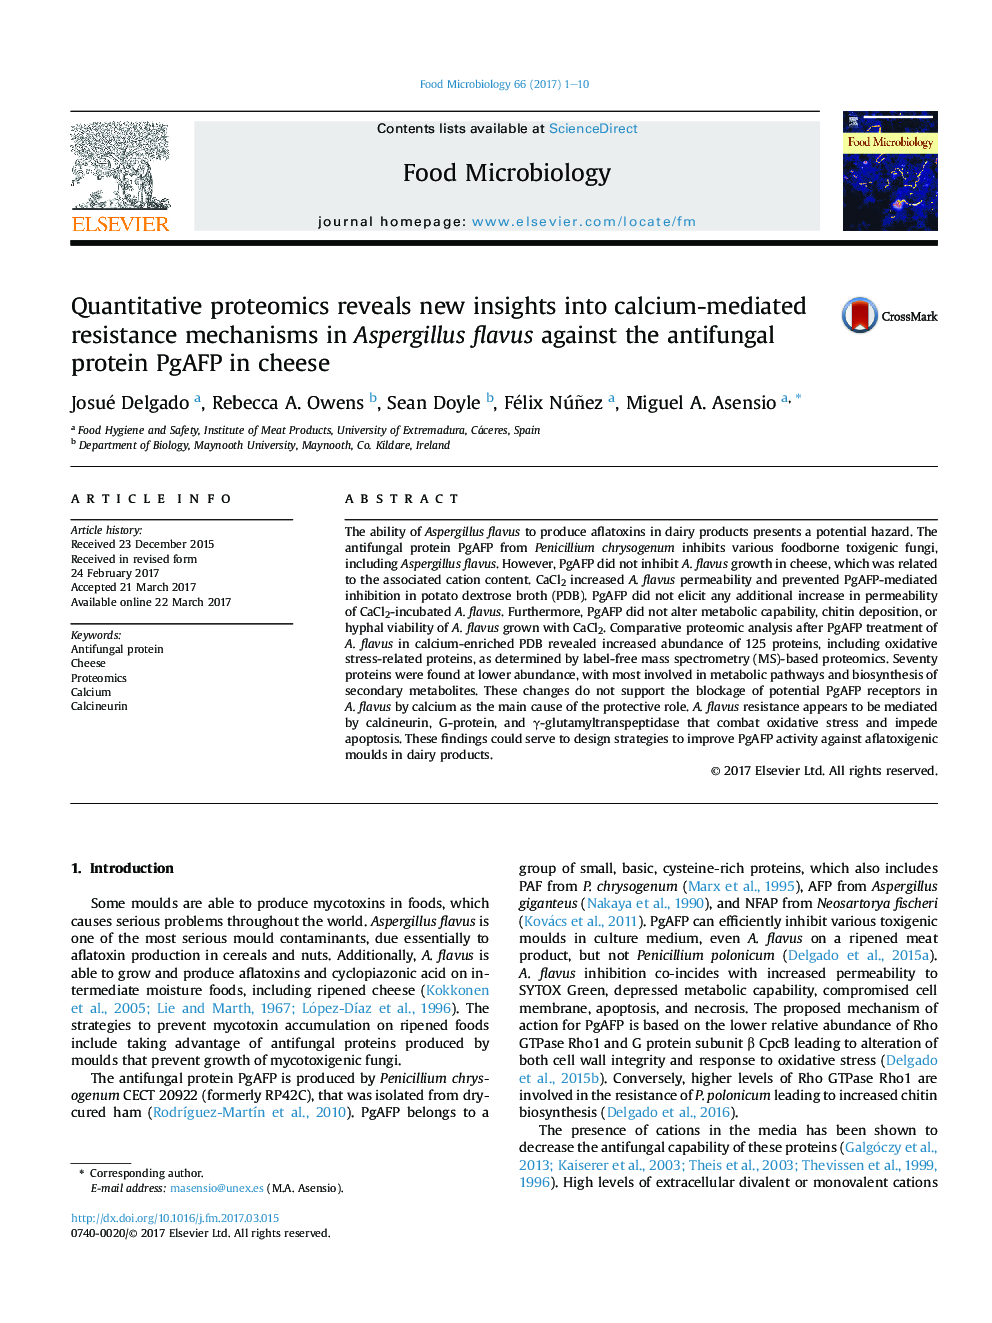 Quantitative proteomics reveals new insights into calcium-mediated resistance mechanisms in Aspergillus flavus against the antifungal protein PgAFP in cheese